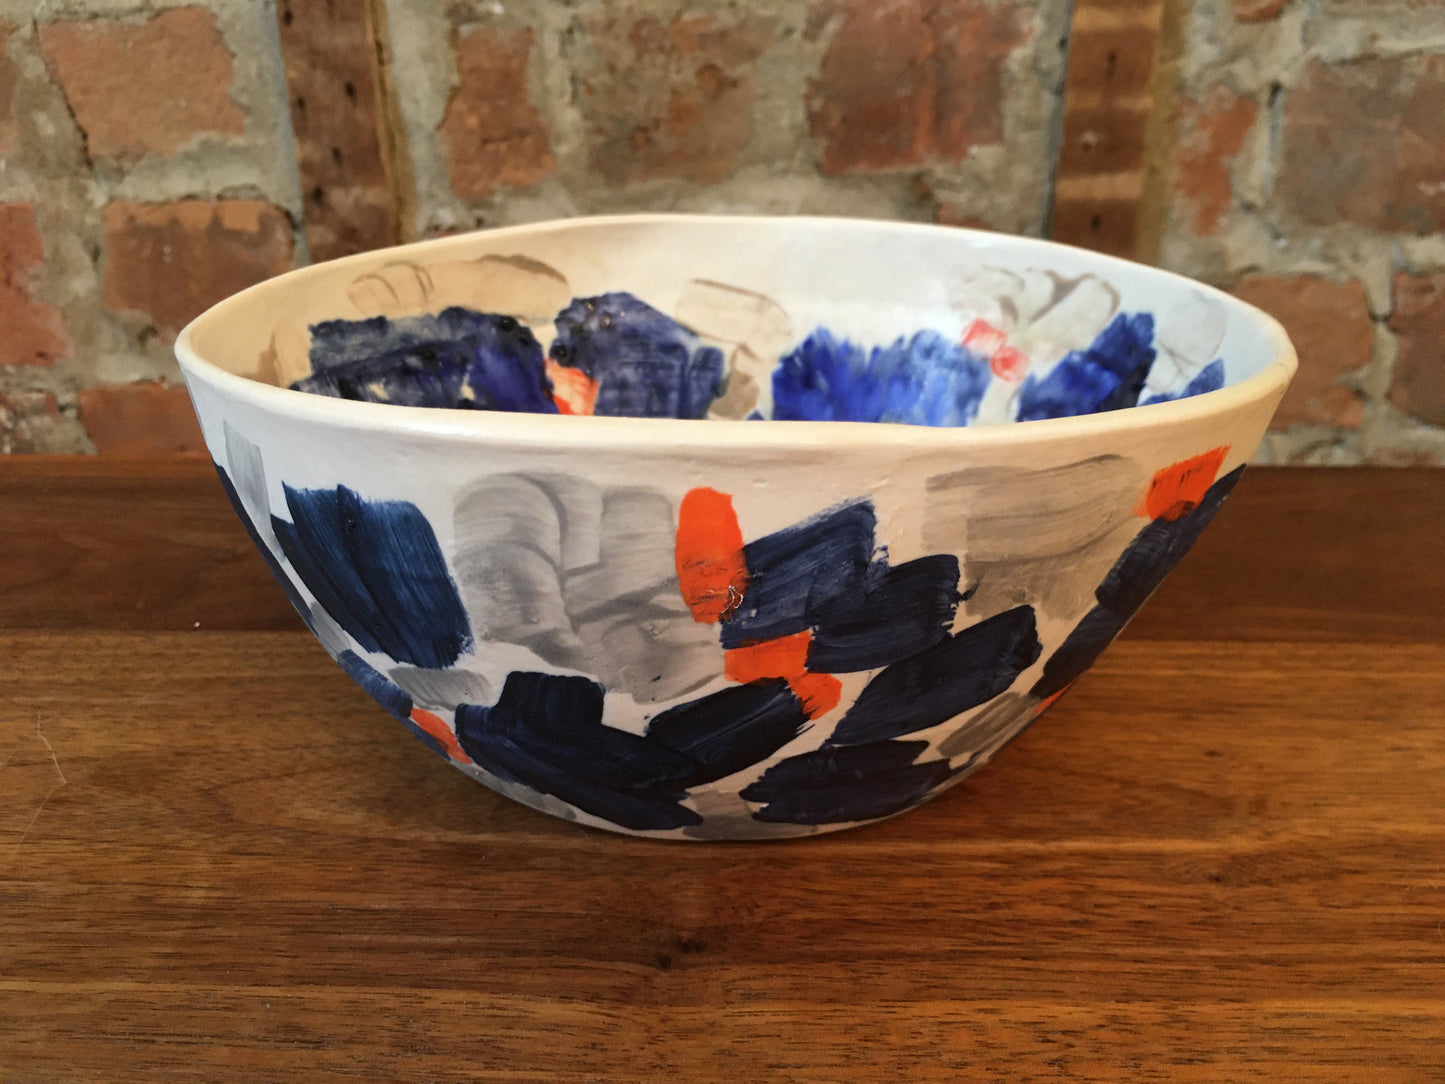 Porcelain Bowl with Grey, Blue, and Orange Marks